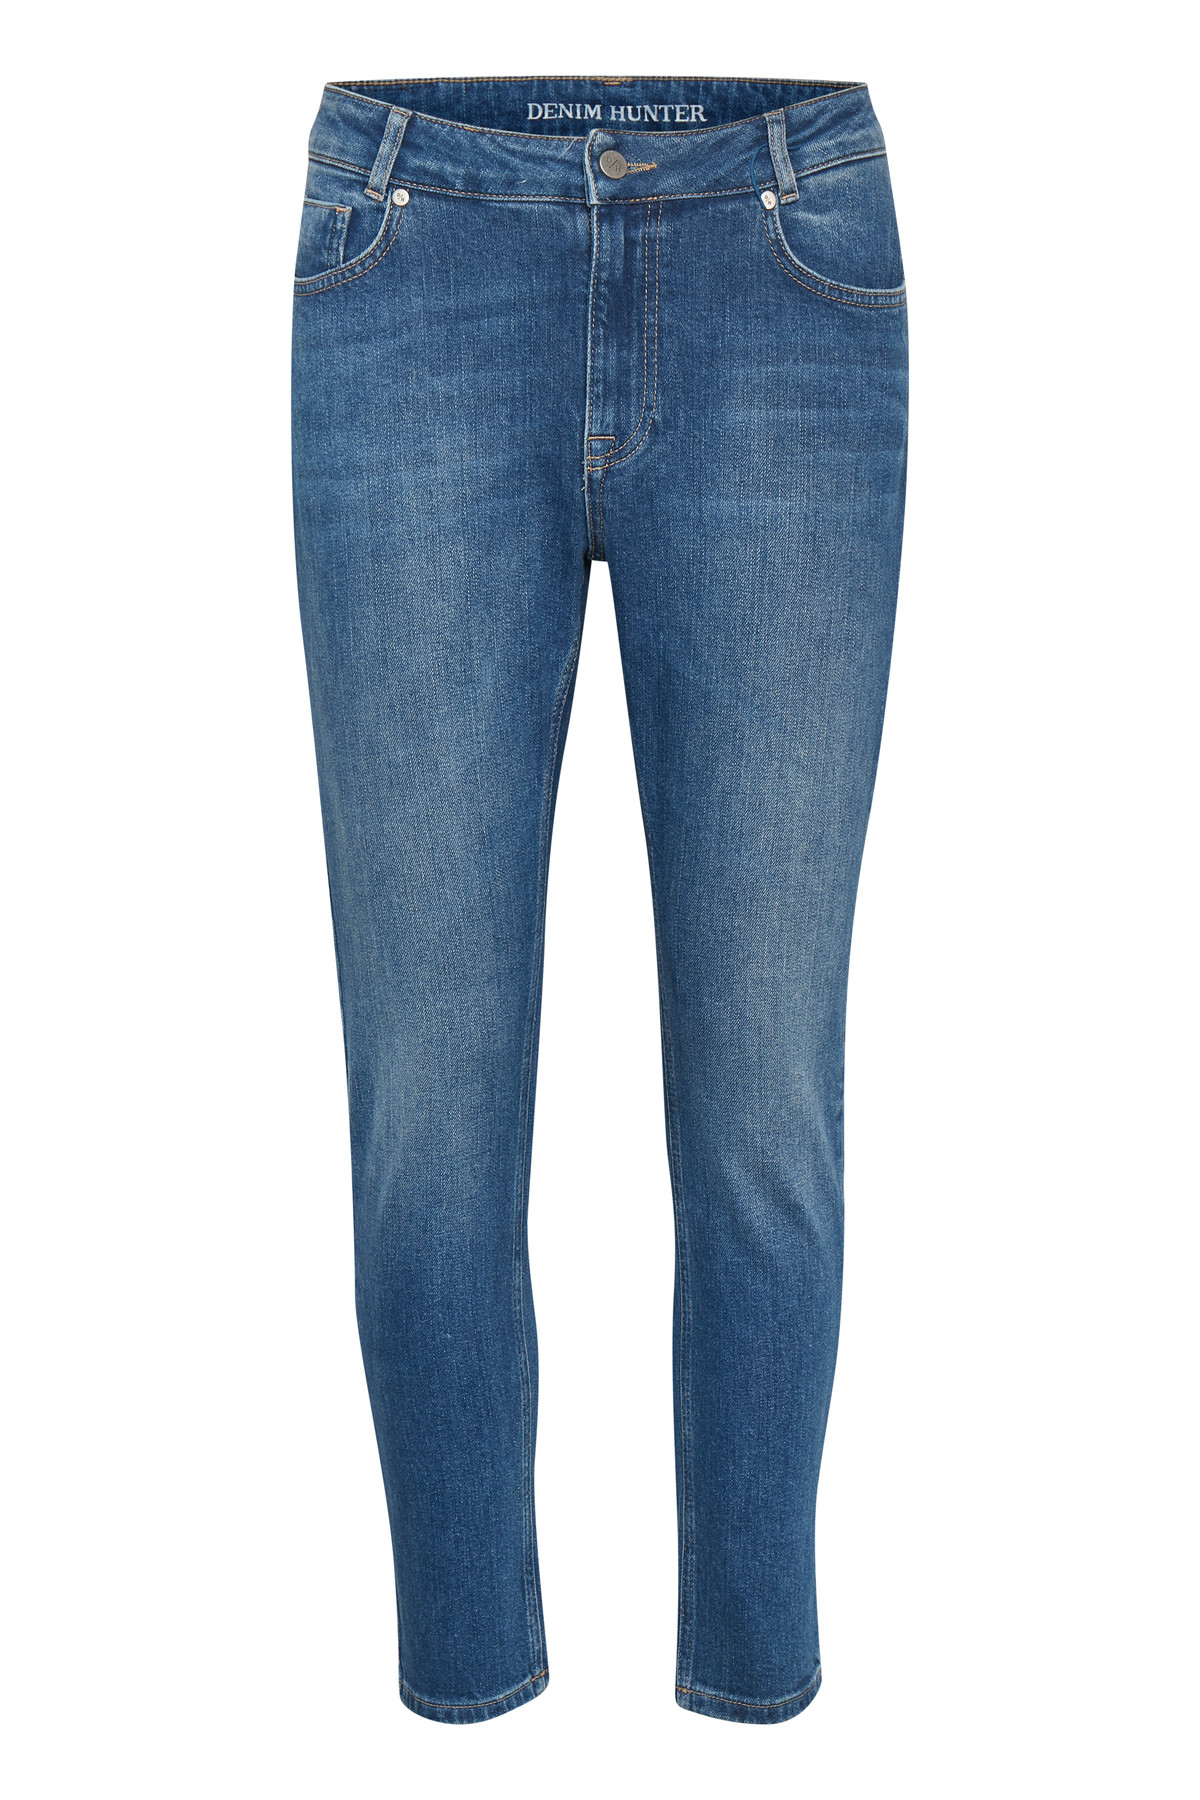 Denim Hunter Mattie High Jeans, Farve: Blå, Størrelse: 26, Dame